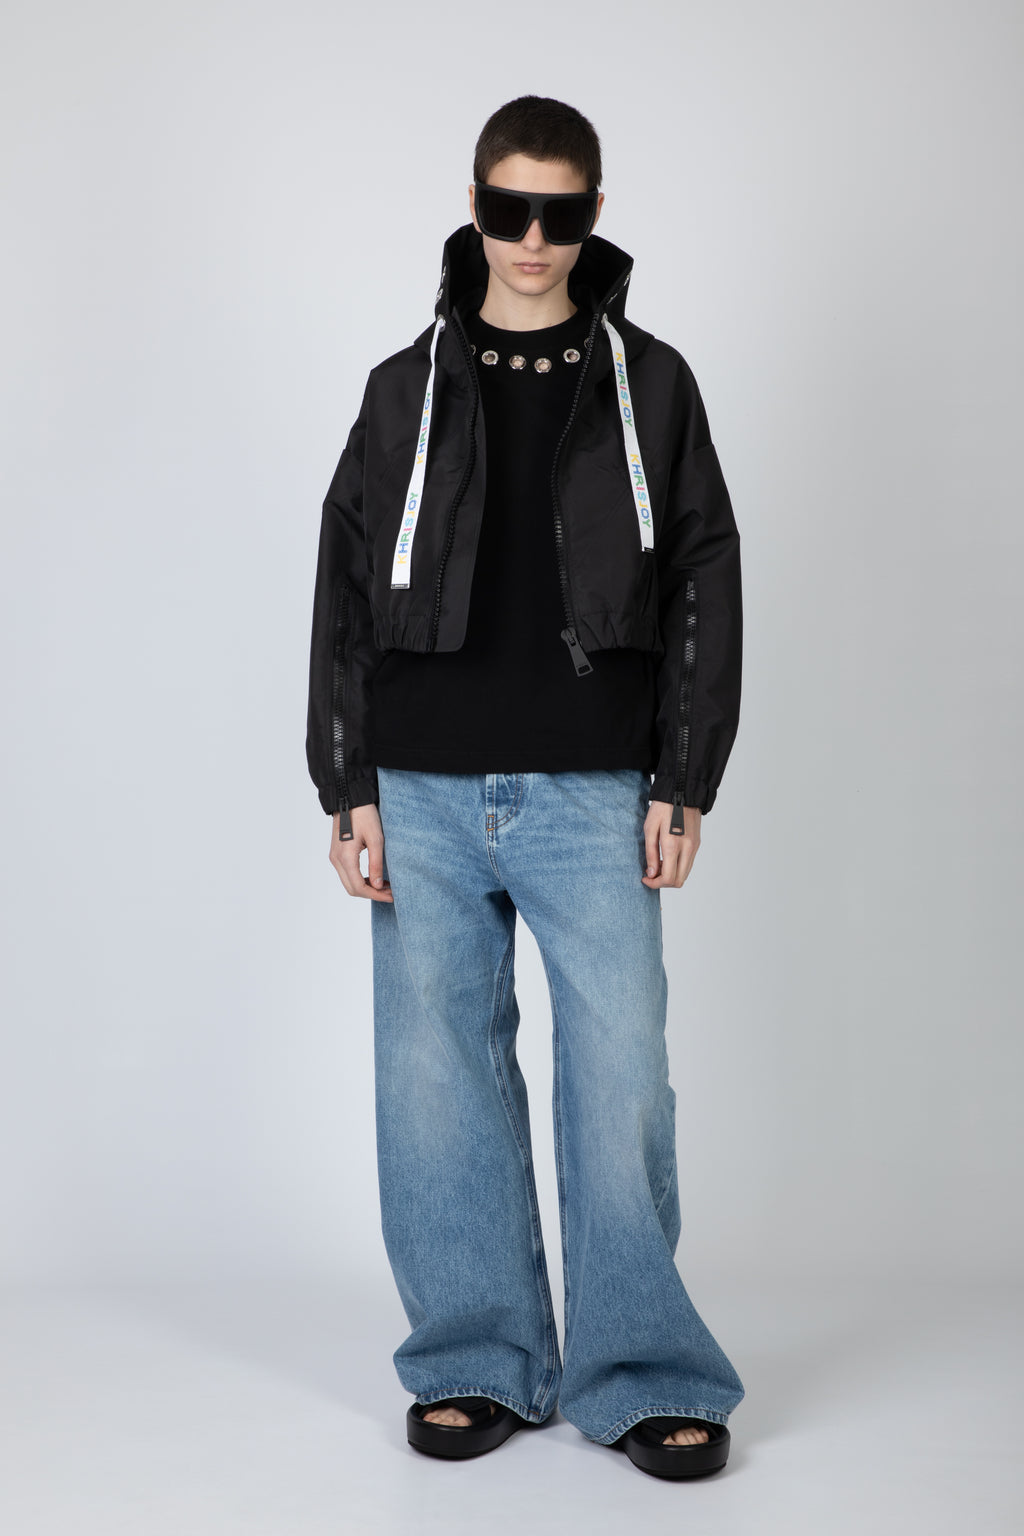 alt-image__Black-nylon-hooded-windproof-jacket---New-Khris-Crop-Windbreaker